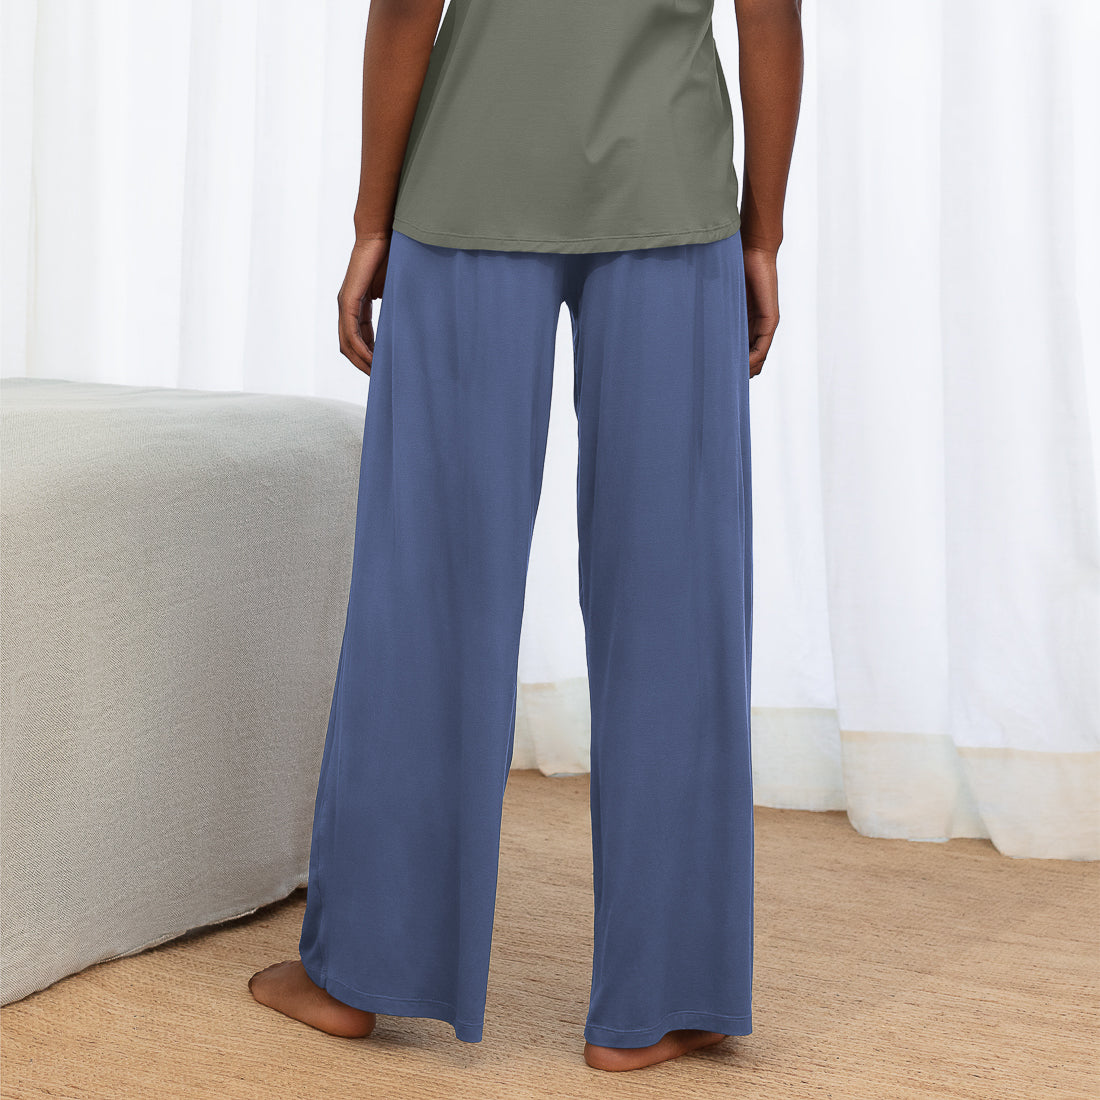 Women's cooling pajamas pants || Coastal blue